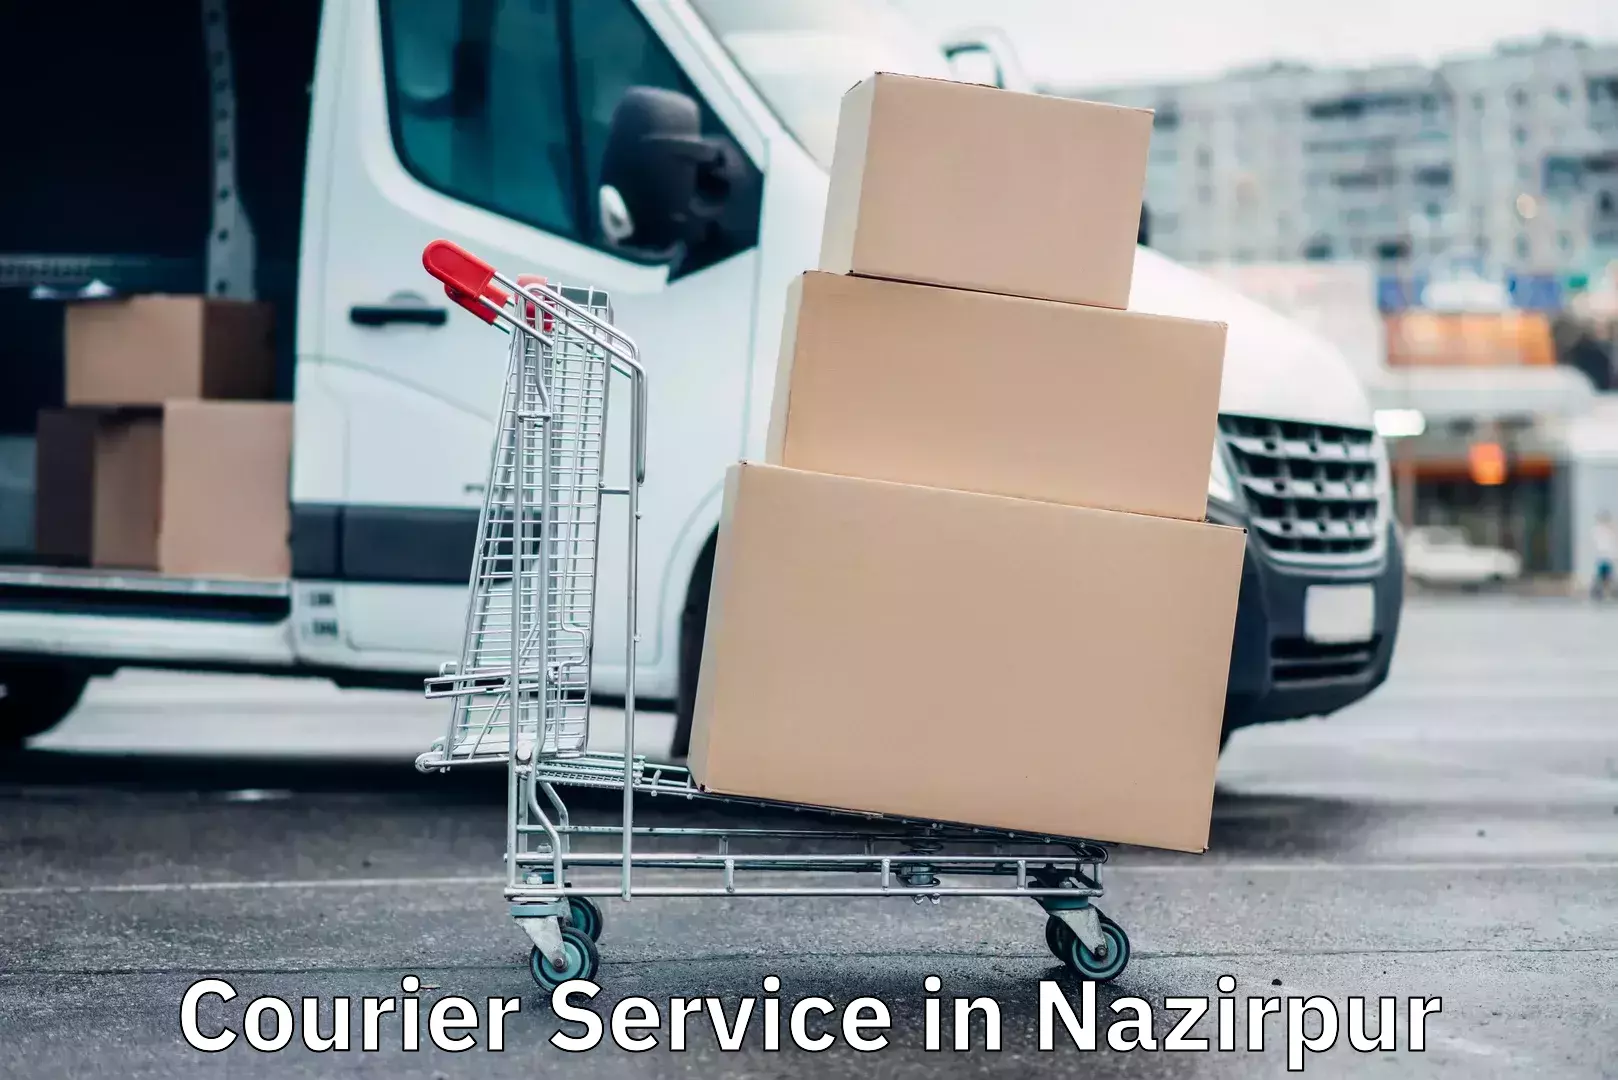 Supply chain efficiency in Nazirpur